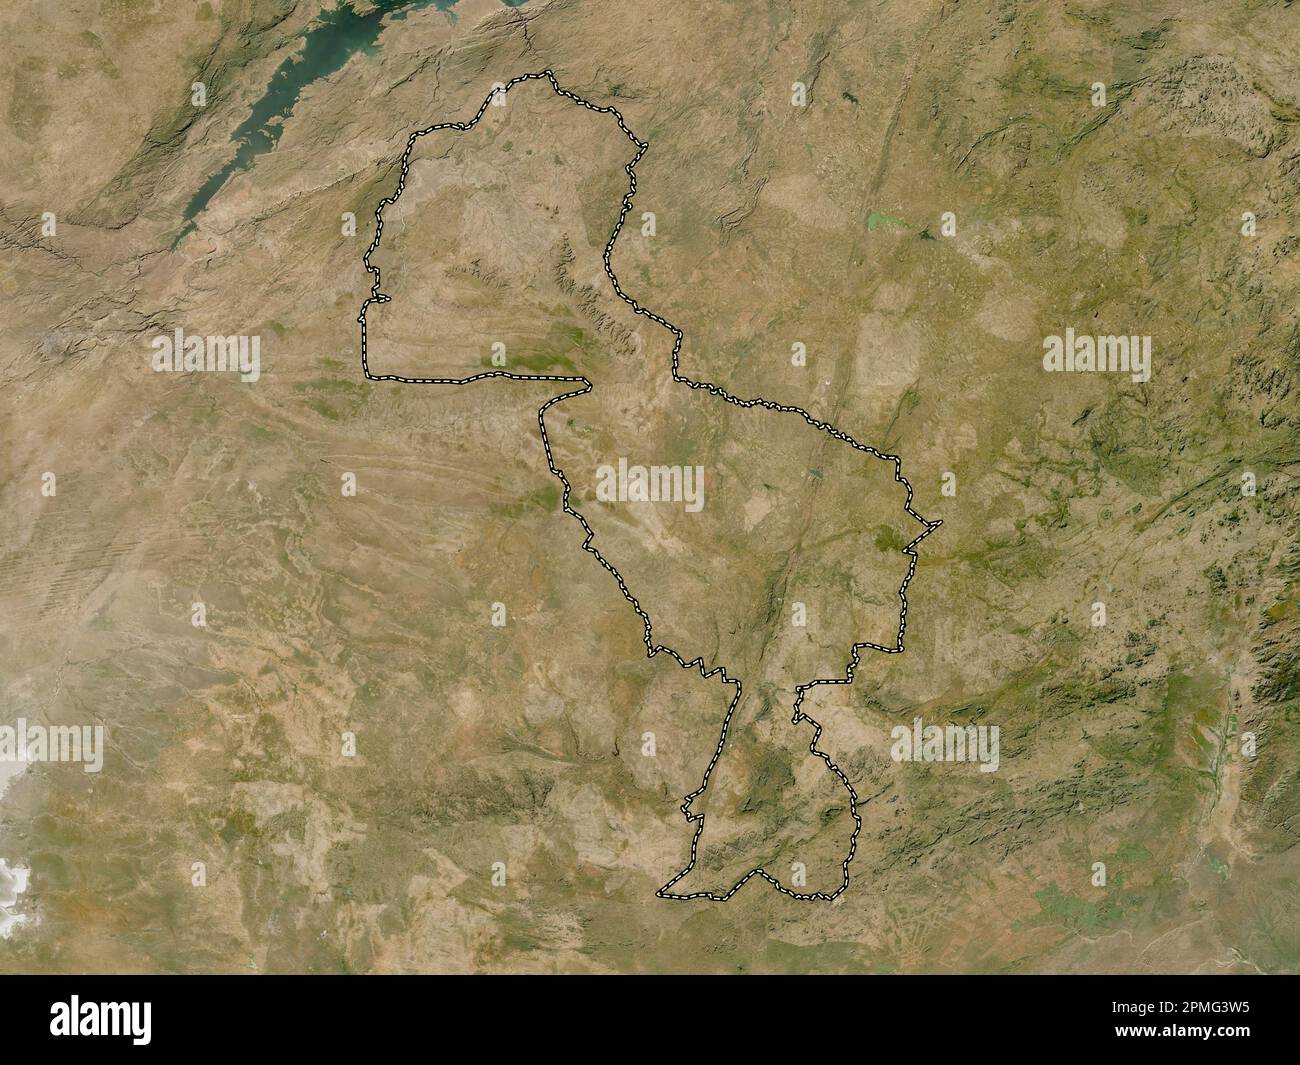 Midlands, province of Zimbabwe. Low resolution satellite map Stock Photo